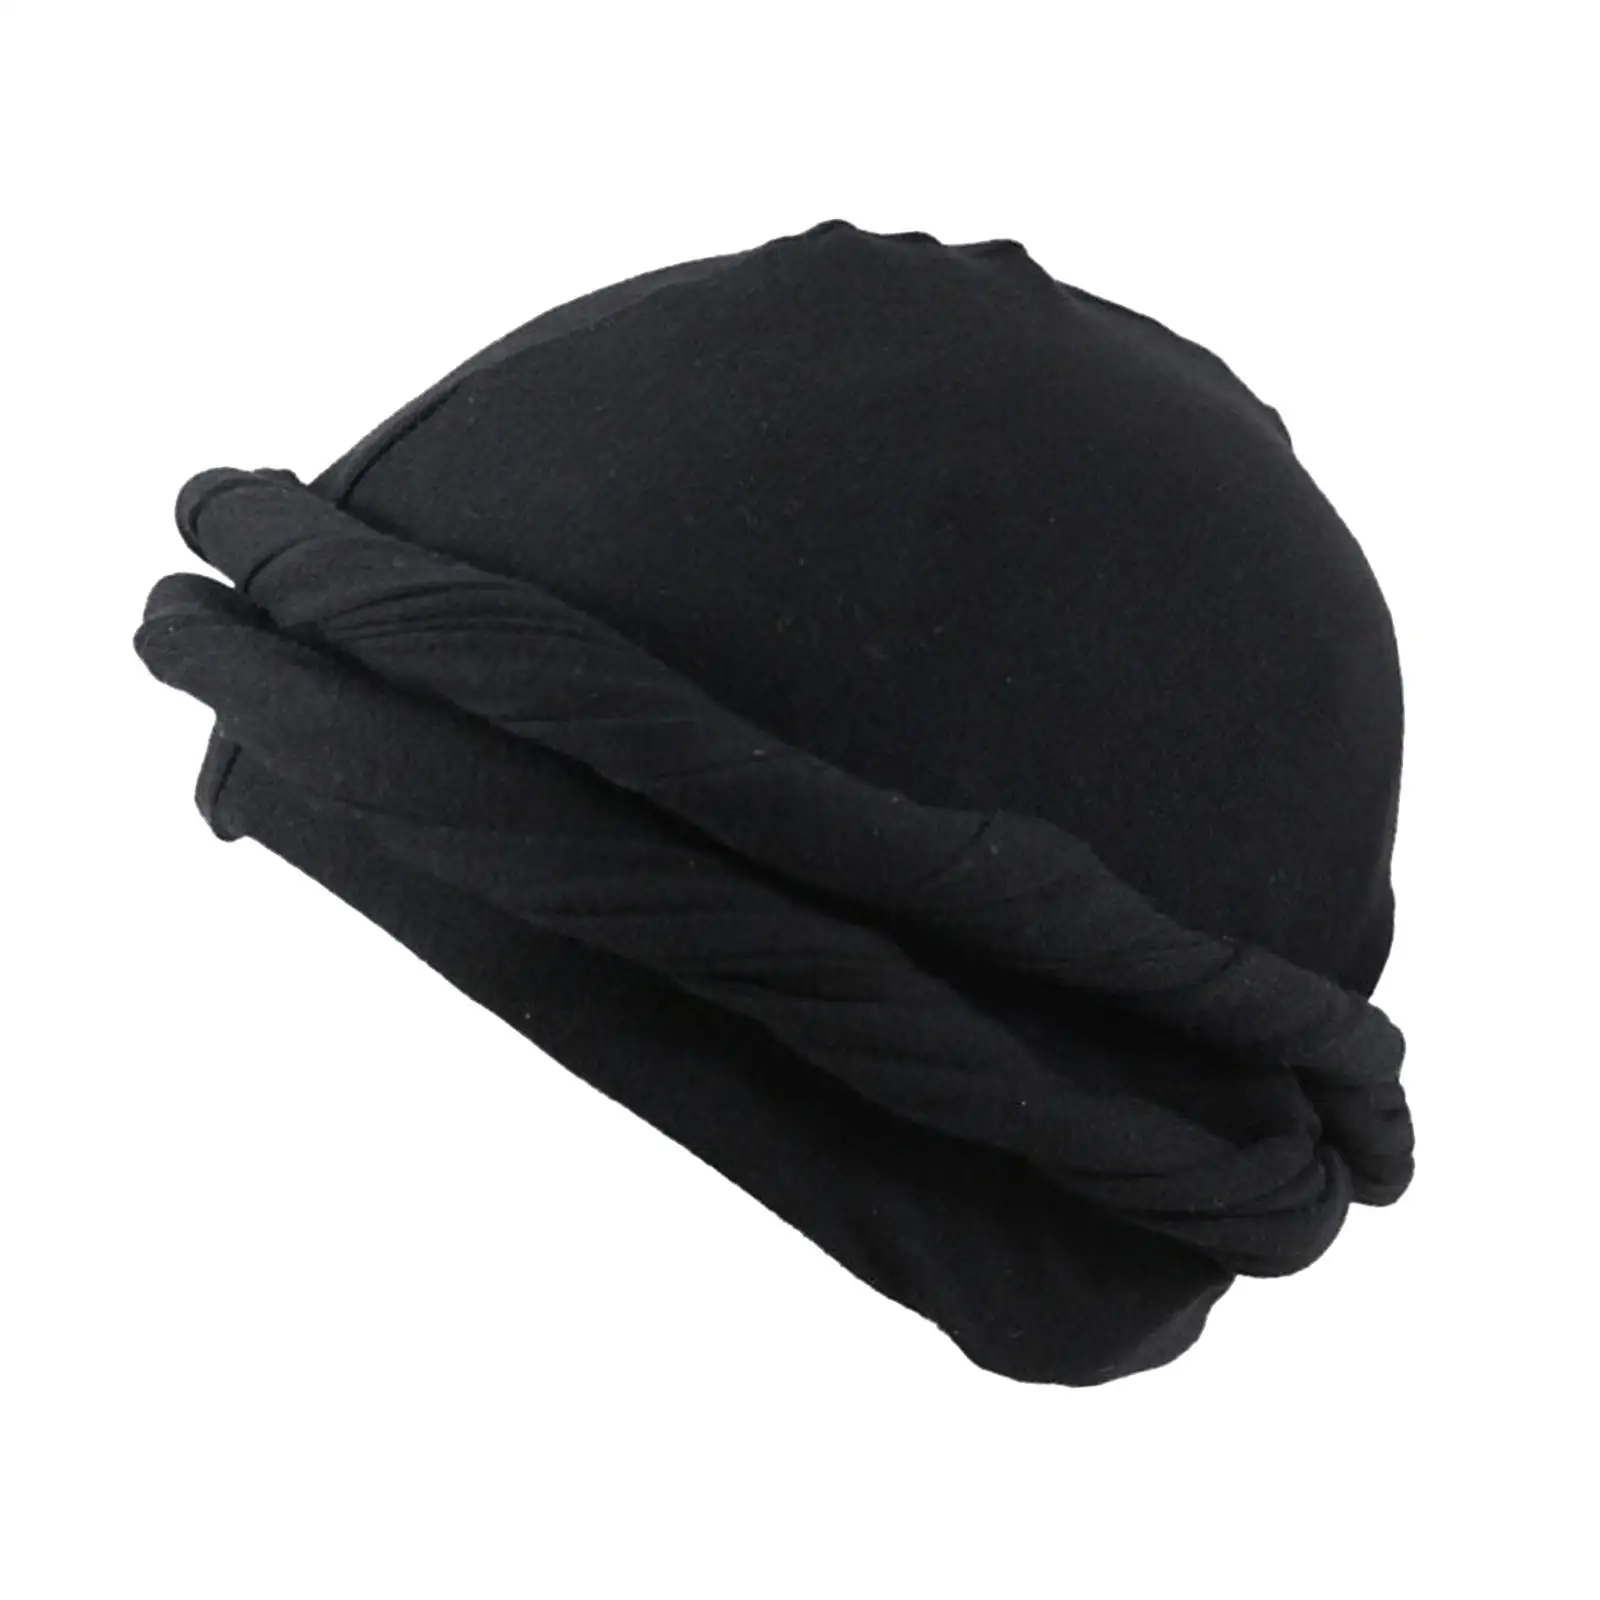 Sports Cycling Cap Head Scarf Hood Headband Baggy Skull Hat Moisture Wicking Sleep Hat Beanie for Outdoor Riding Climbing Daily